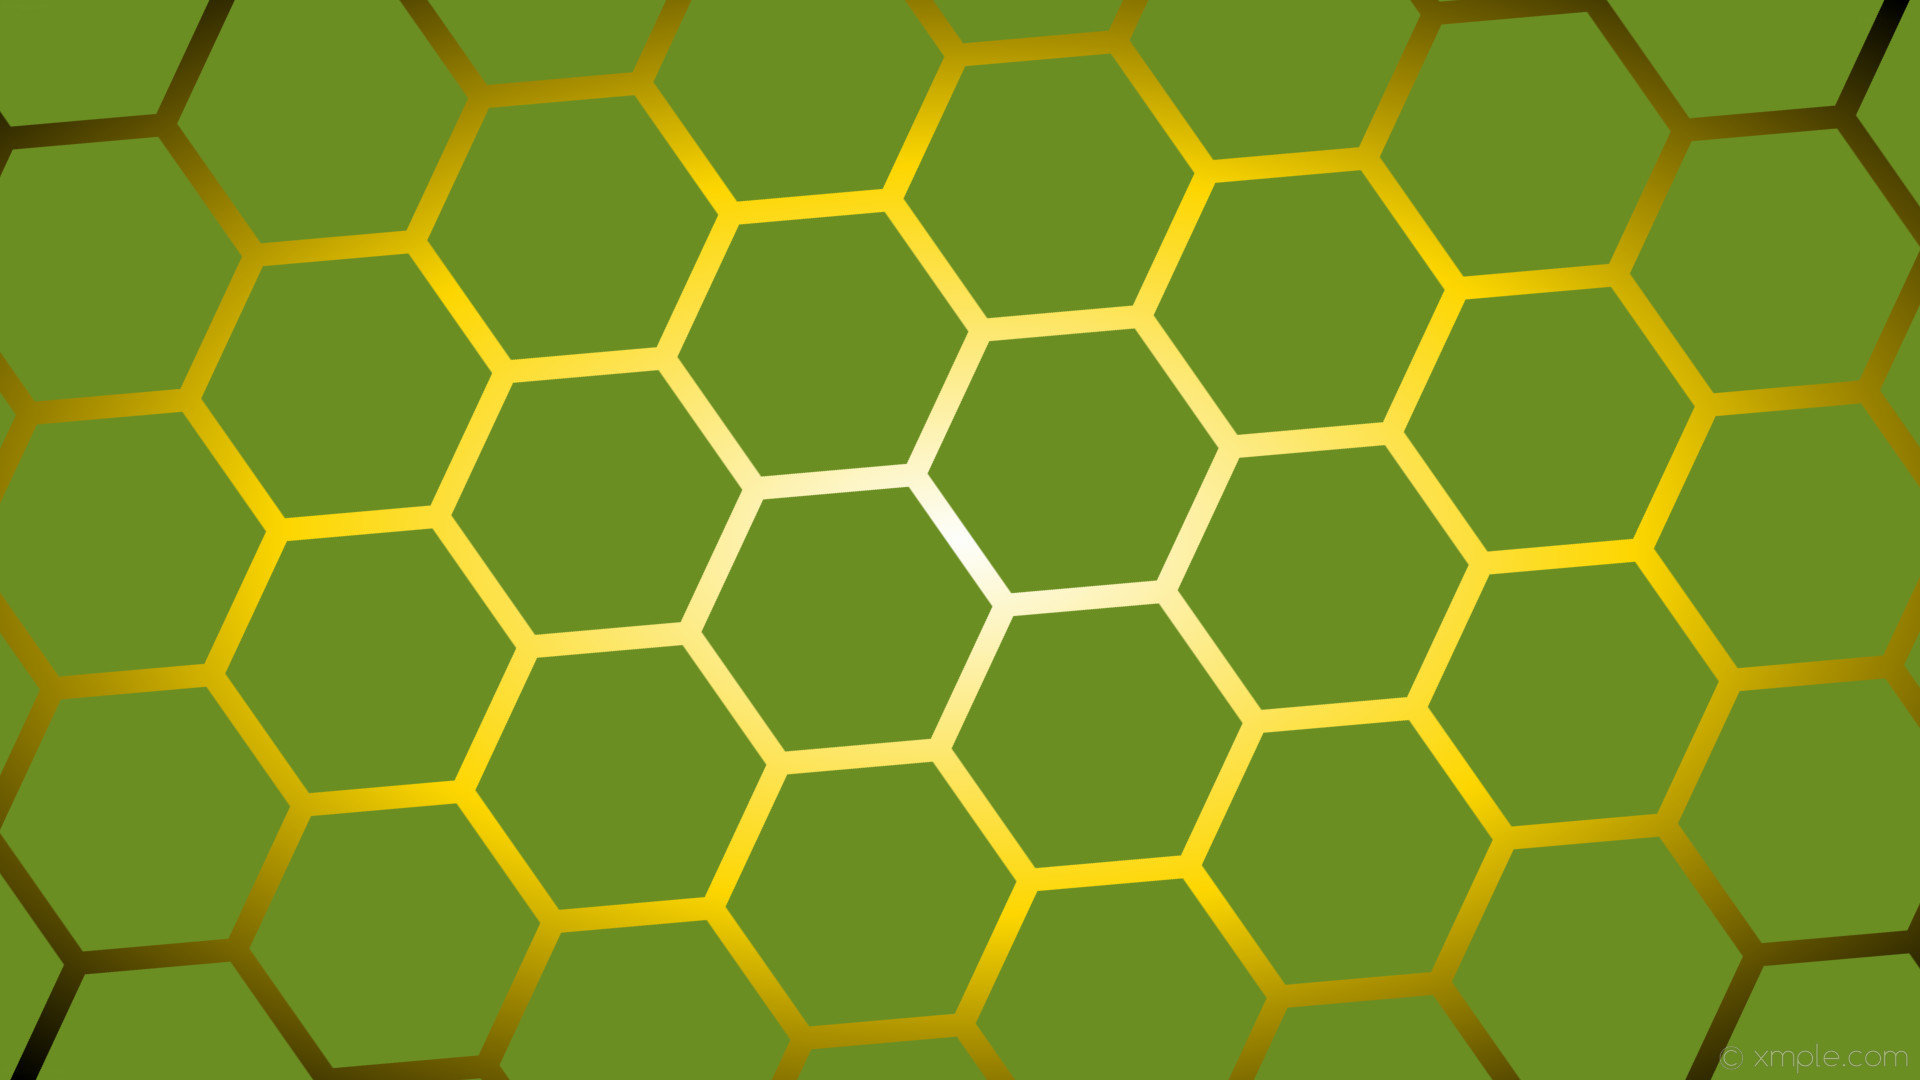 1920x1080 wallpaper white glow green black yellow gradient hexagon olive drab gold  #6b8e23 #ffffff #